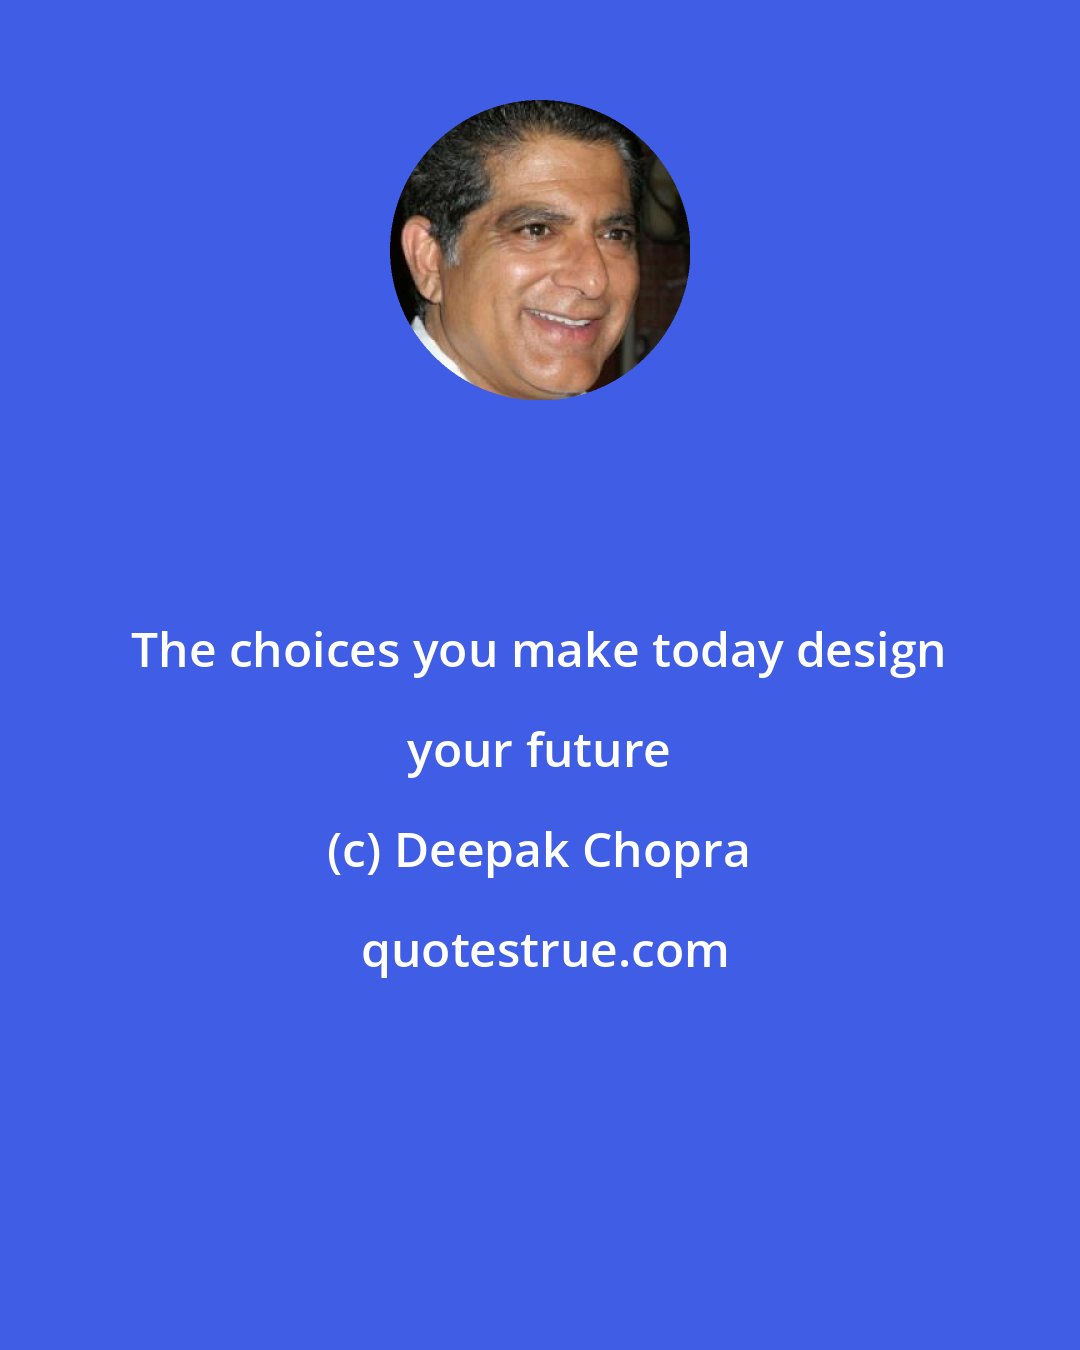 Deepak Chopra: The choices you make today design your future